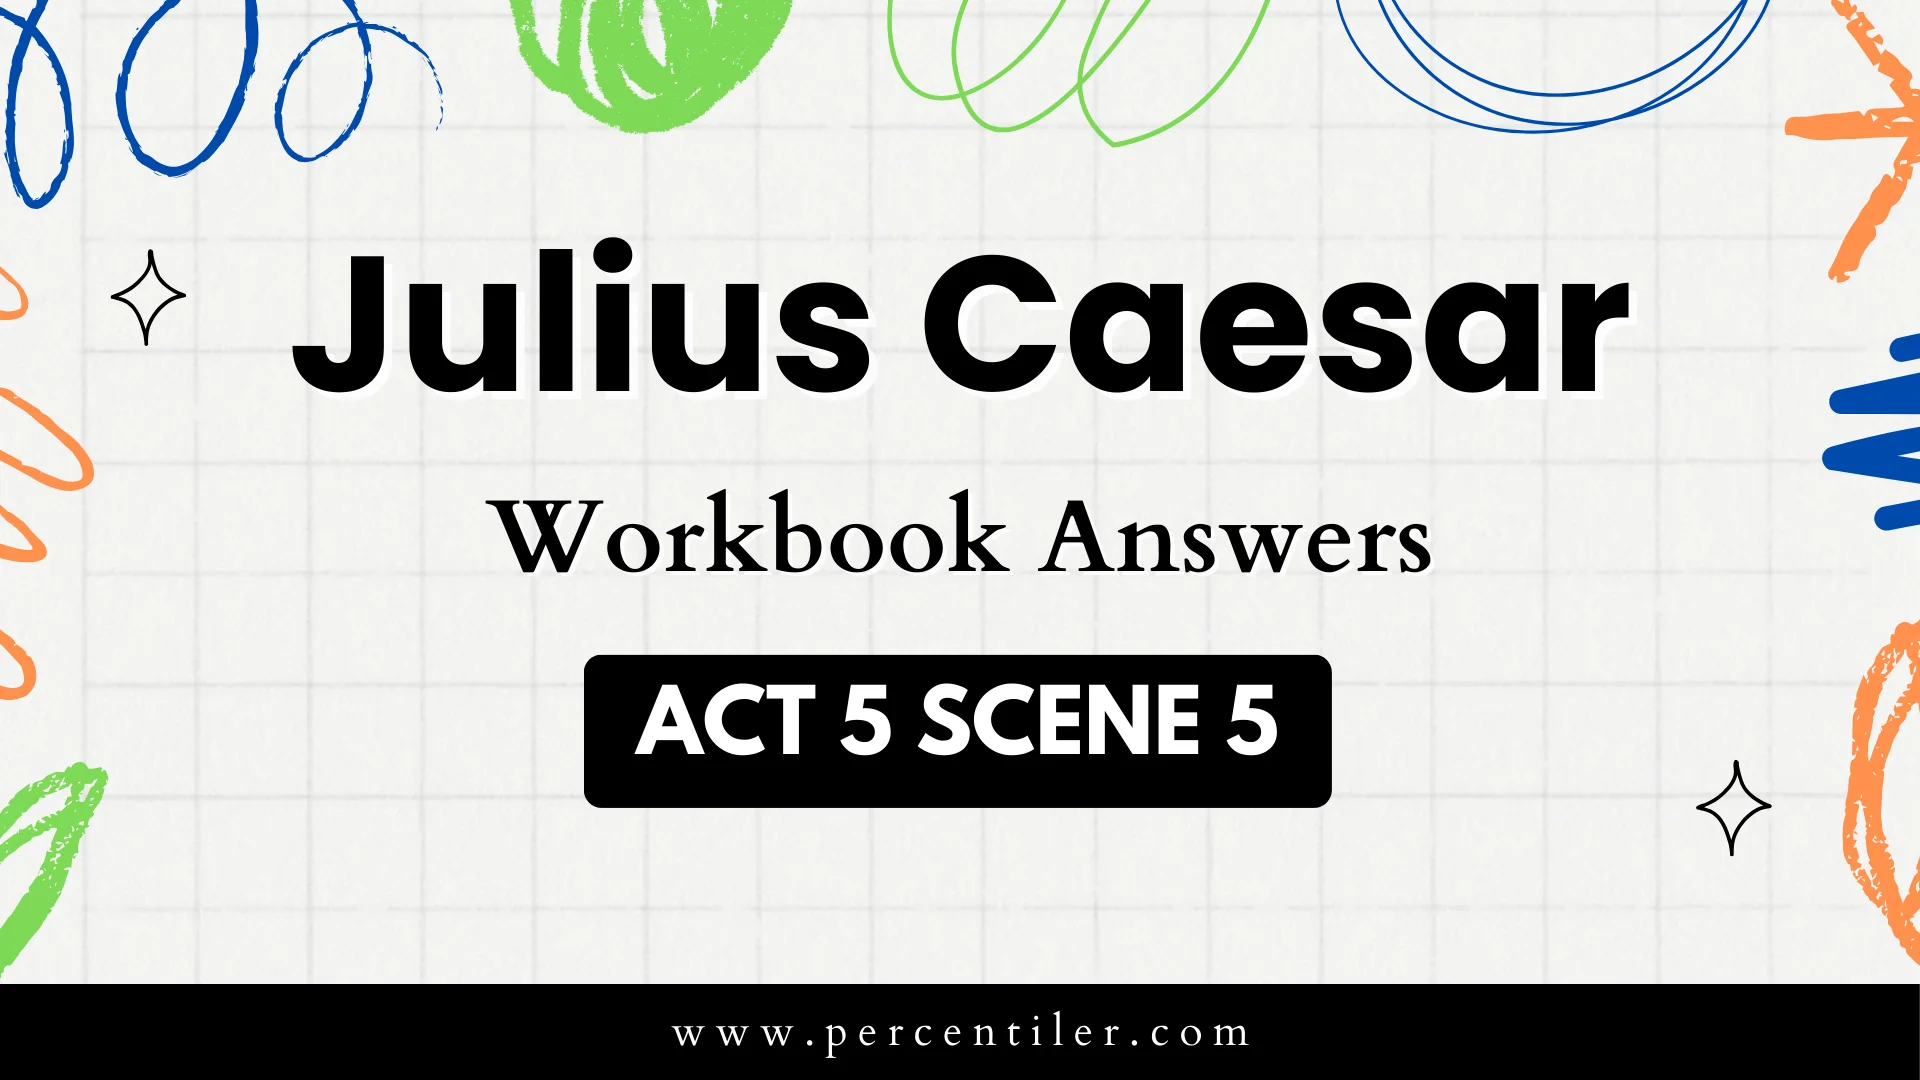 ICSE Julius Caesar Workbook Answer : Act 5 Scene 5